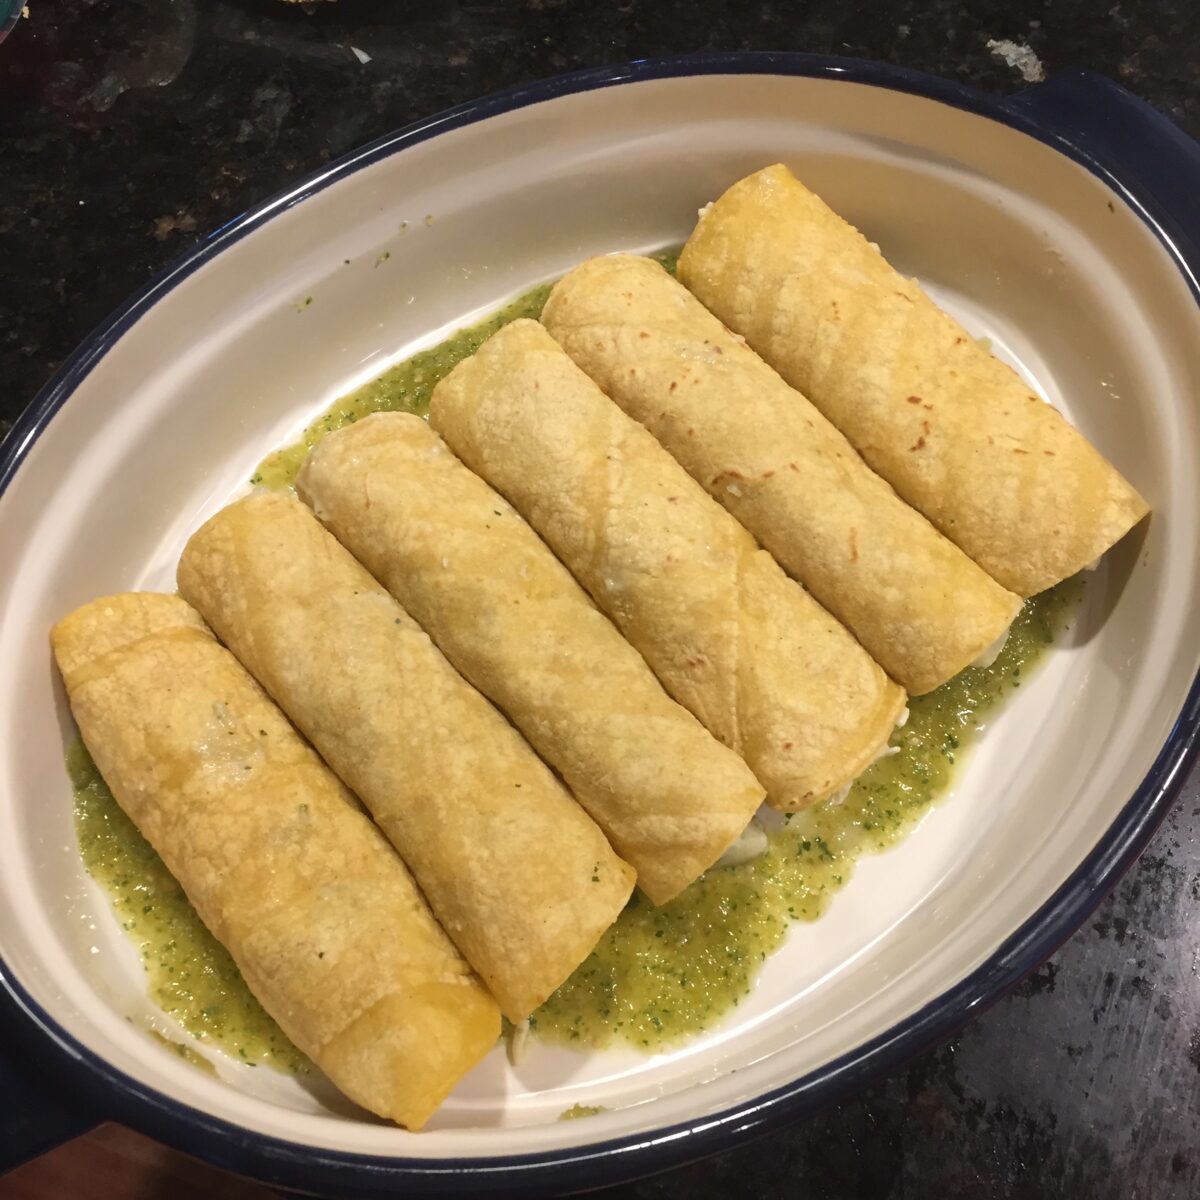 Rolled enchiladas in a baking dish